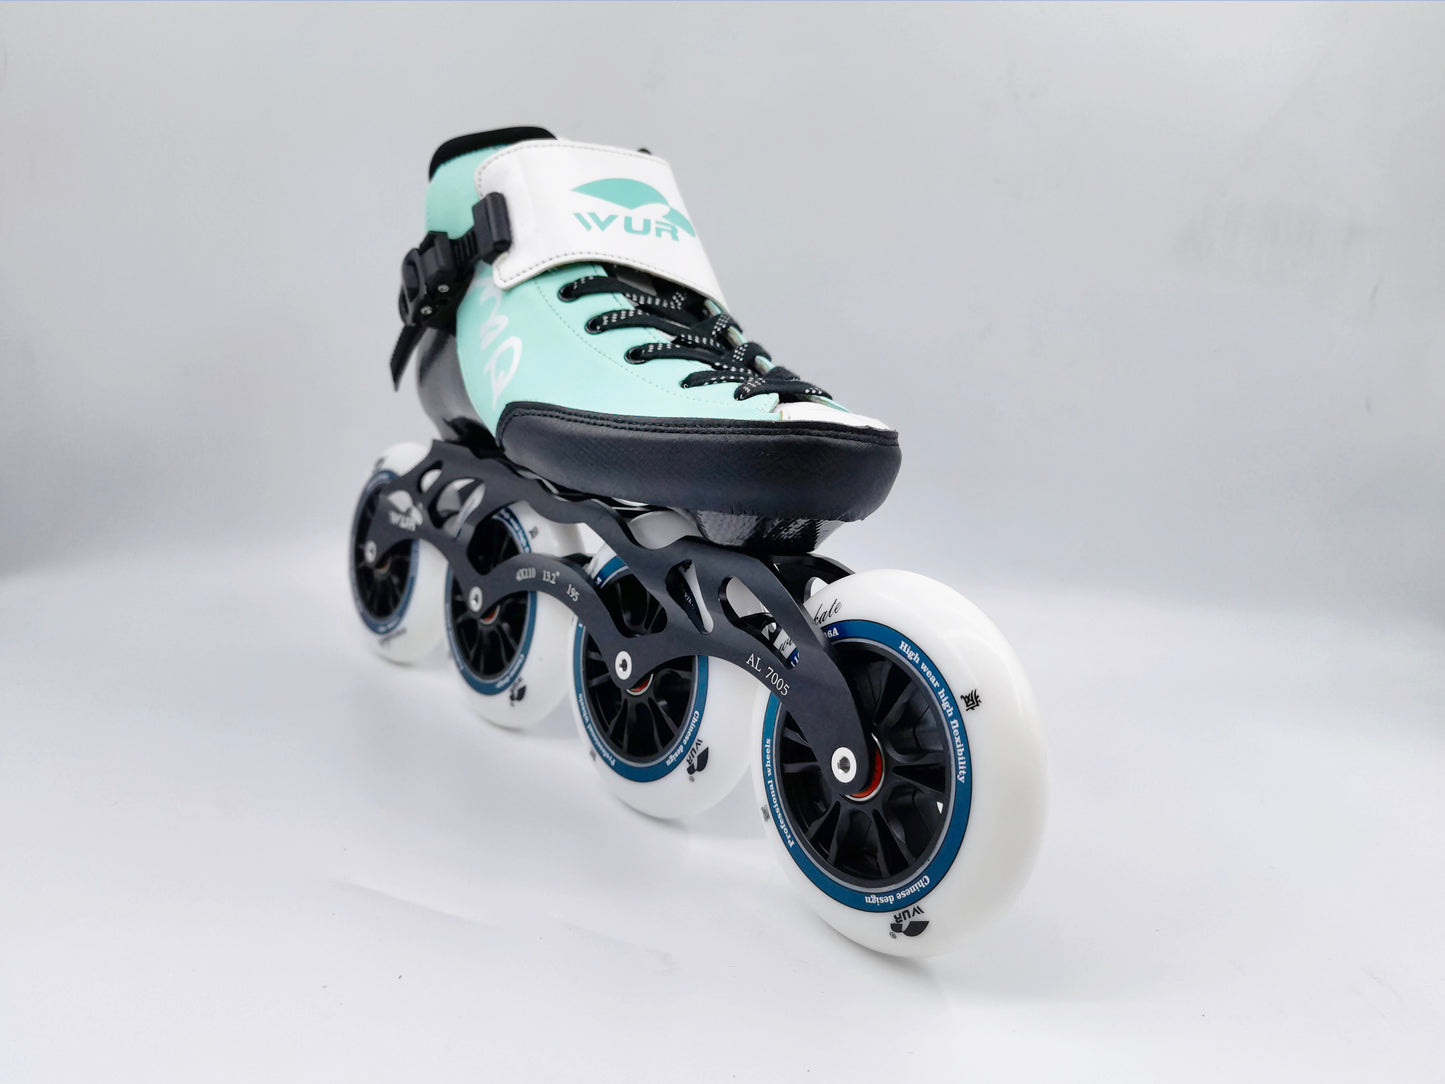 WUR skate speed skate model CX mint